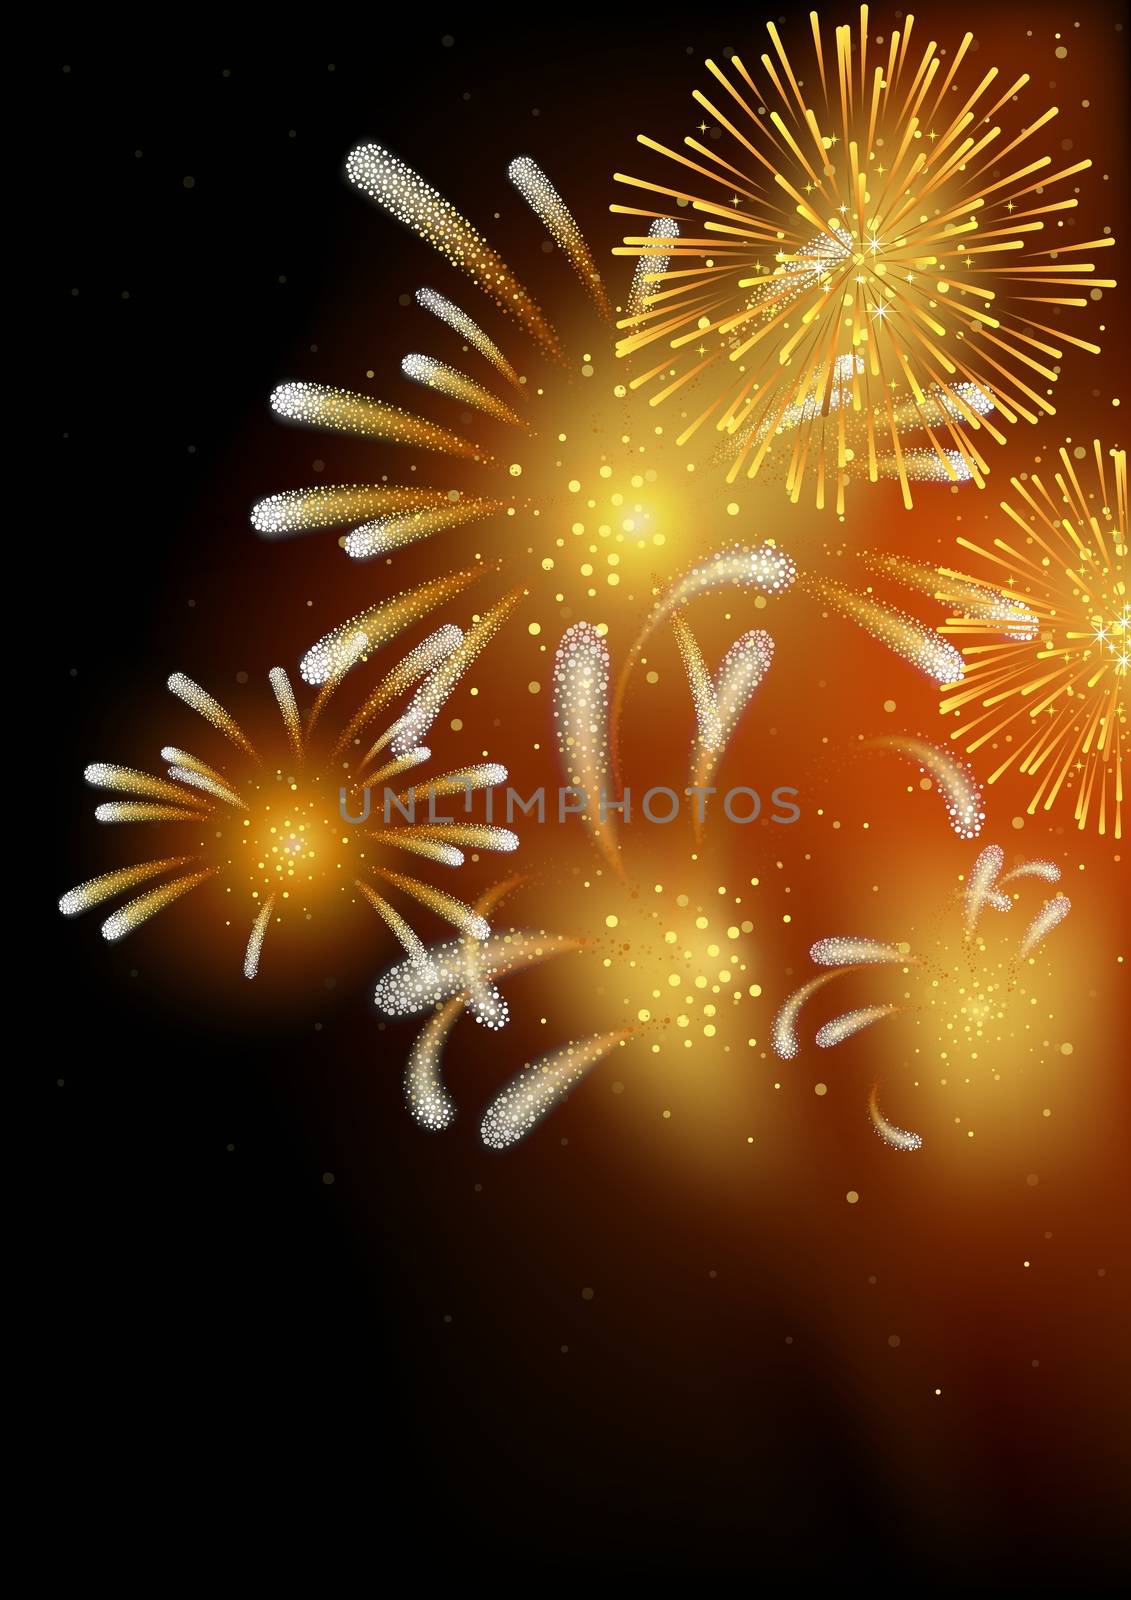 Fireworks - Holiday Background Illustration